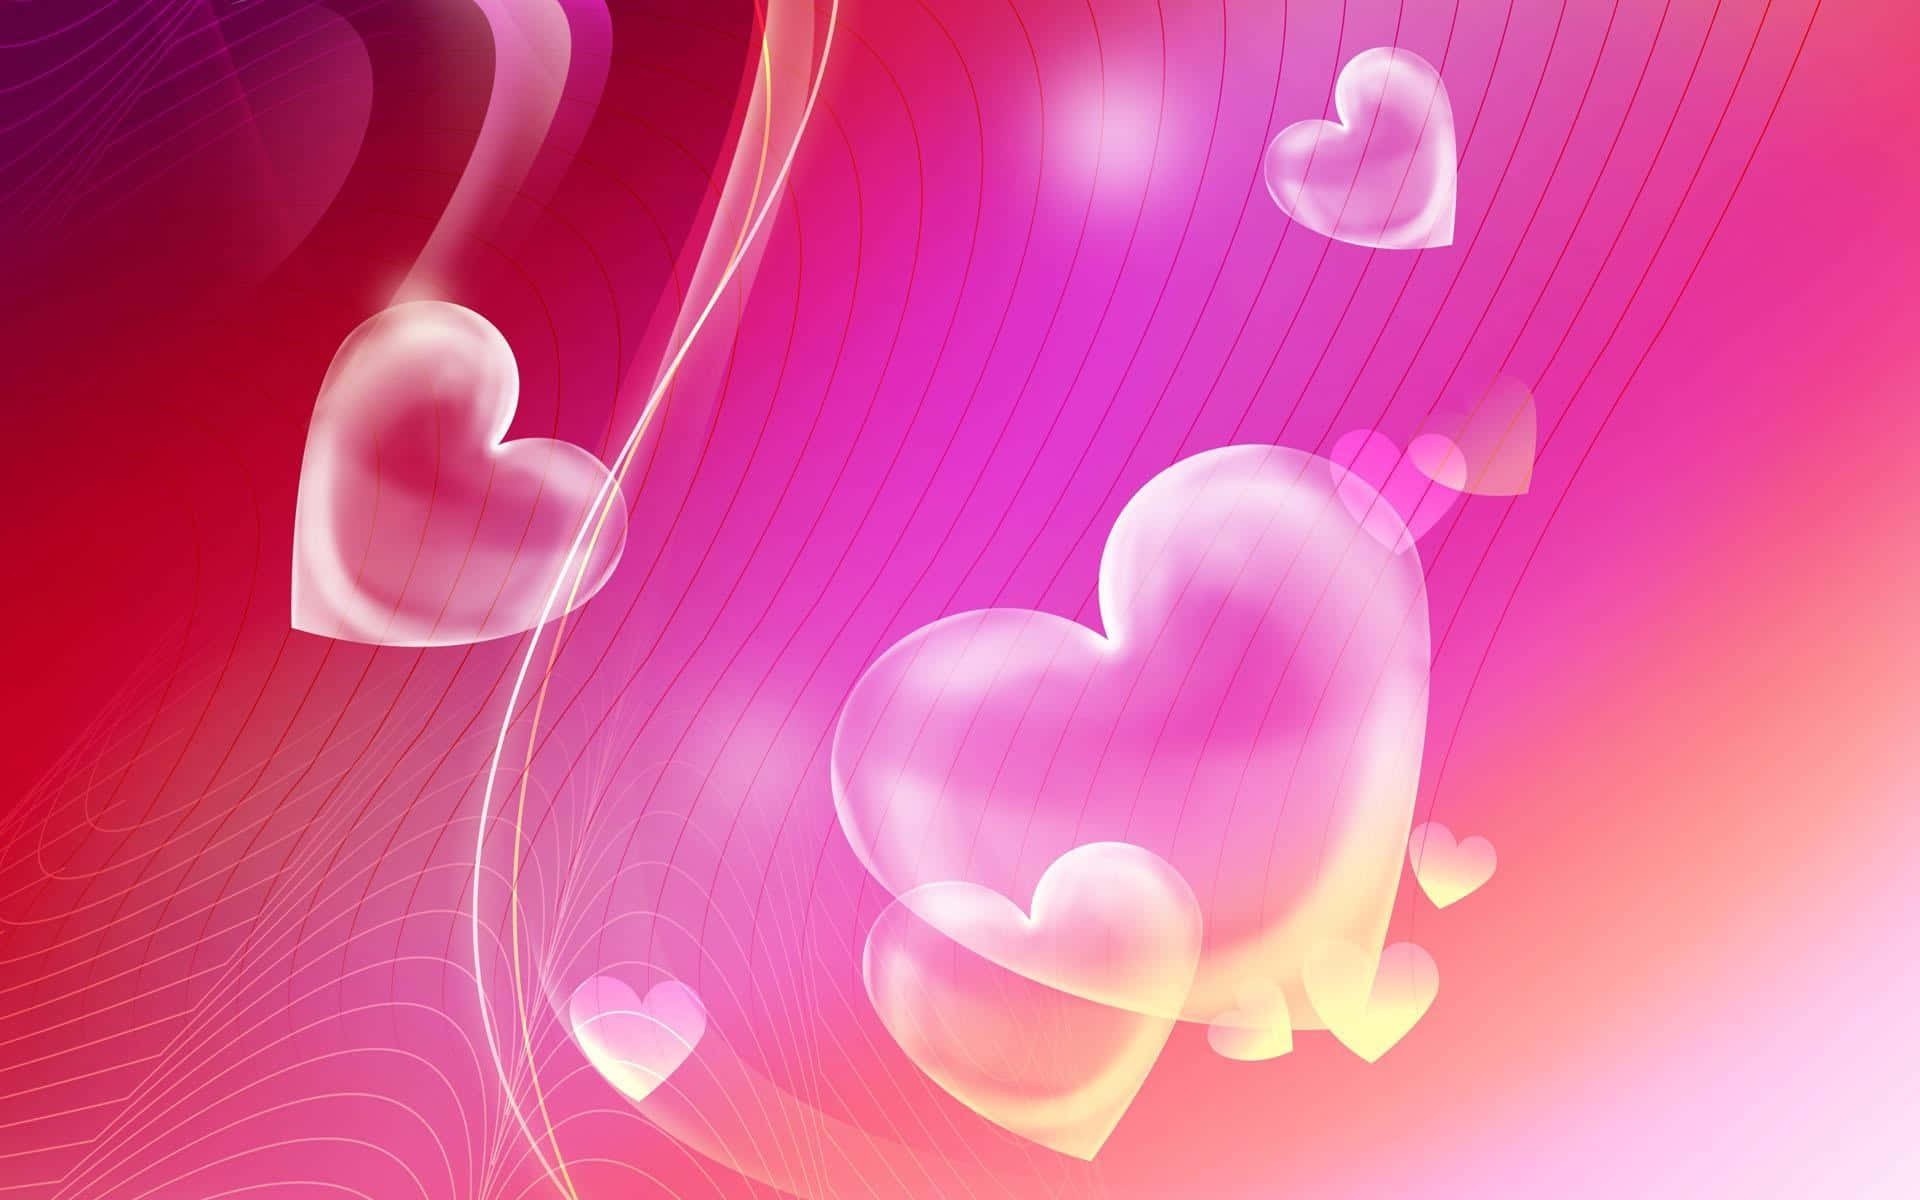 Pink Love - A Romantic Heart in a Fantasy World Wallpaper